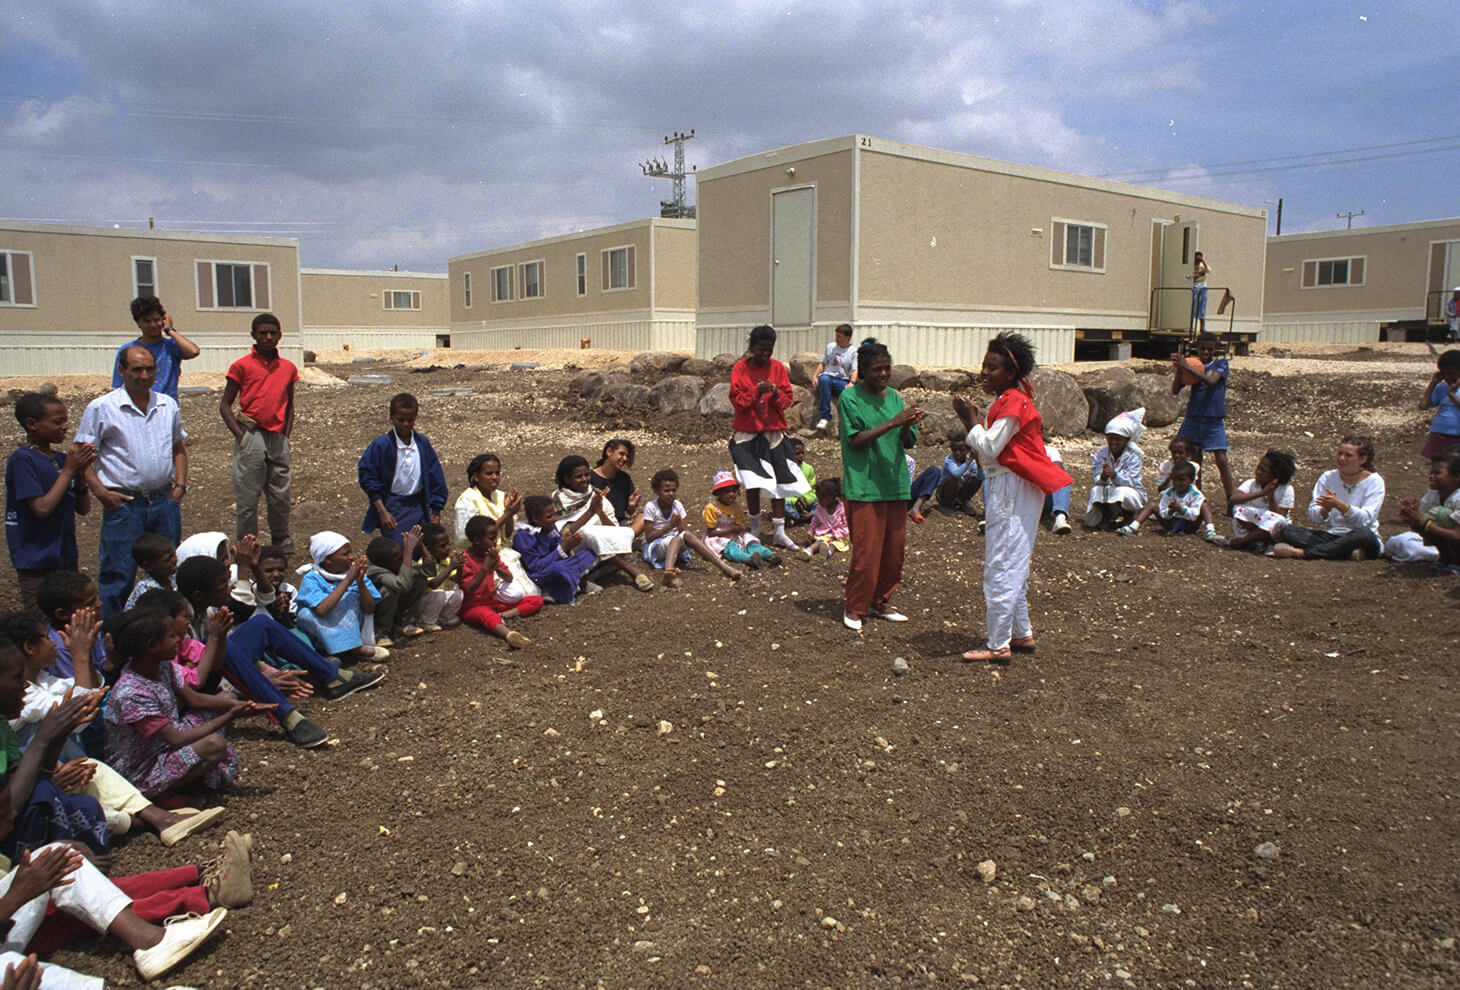 SINGING AND DANCING AT KFAR TABOR MOBILE HOMESITE,WITH CHILDREN FROM NEARBY MOSHAVIM, OPERATION SOLOMON, ETHIOPIAN IMMIGRANTS. Photo: Doron Horowitz, GPO